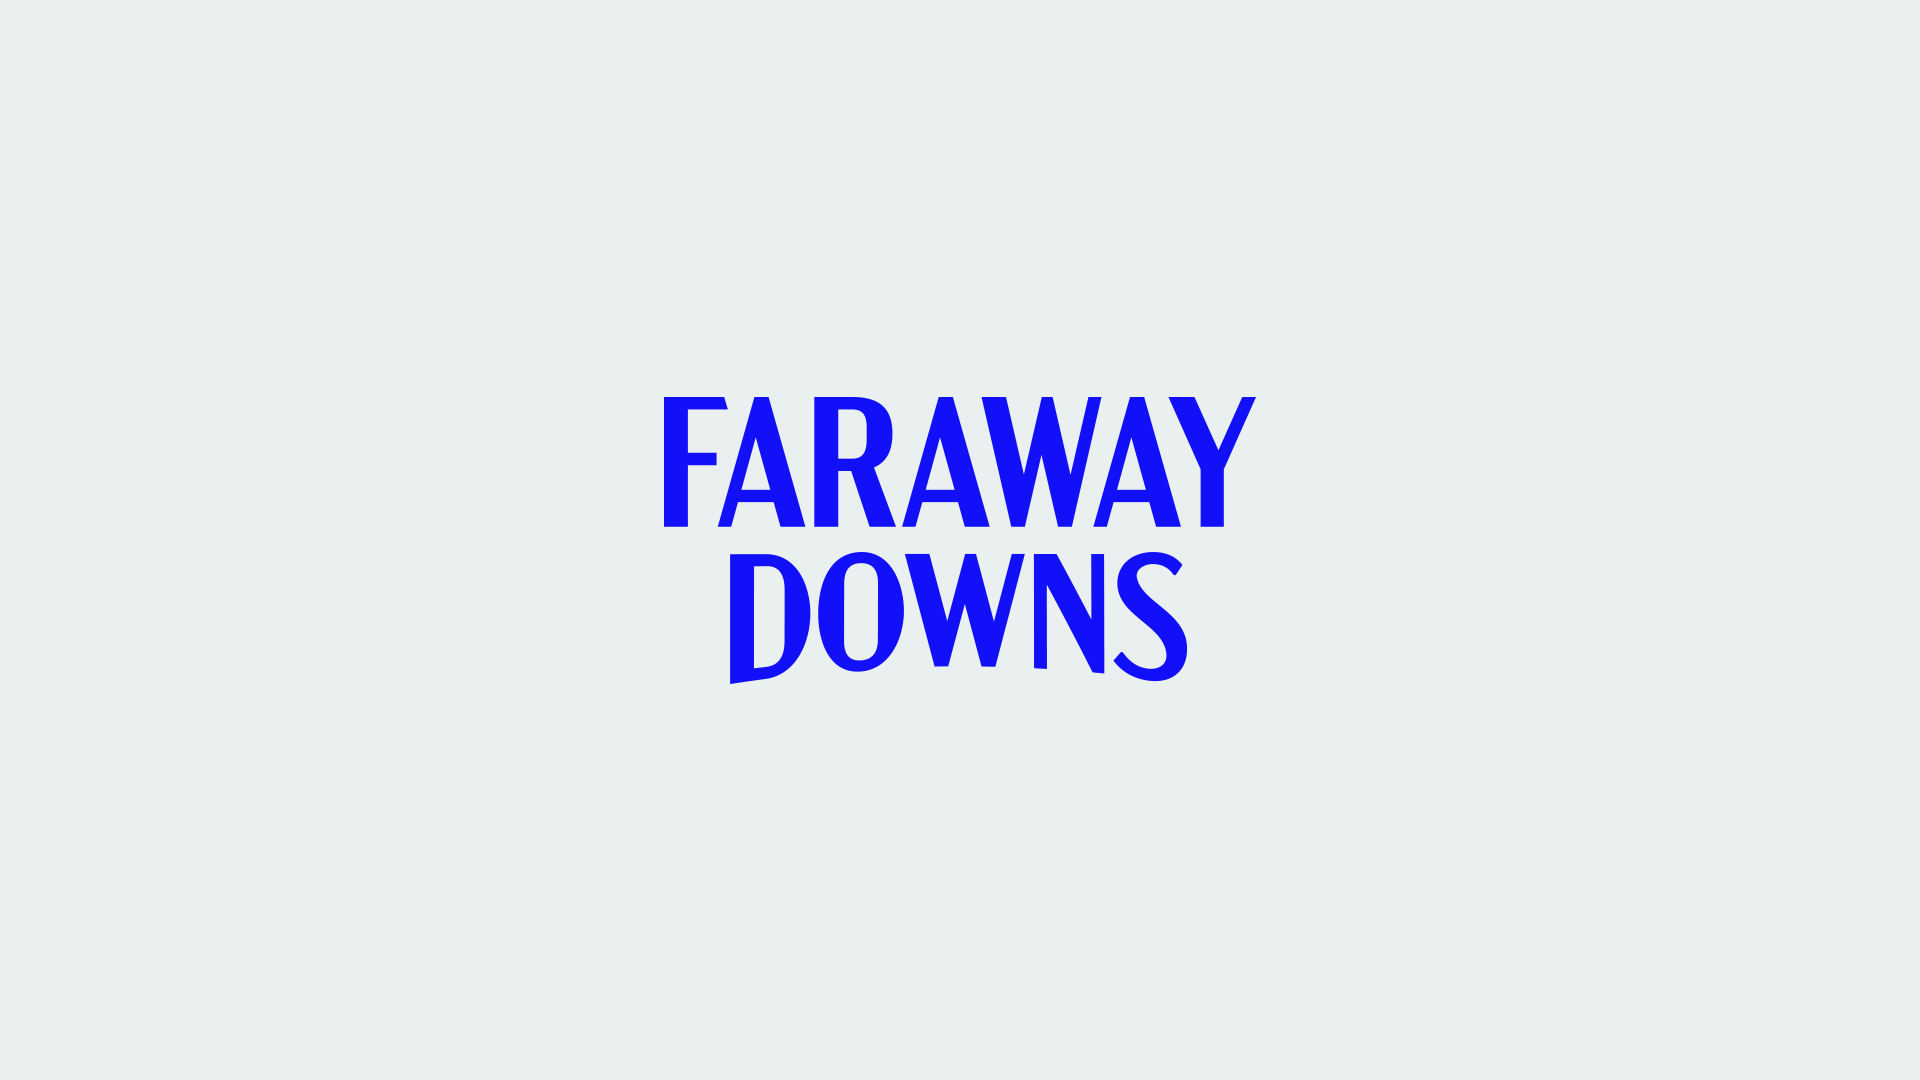 marks_farawayDowns_rev